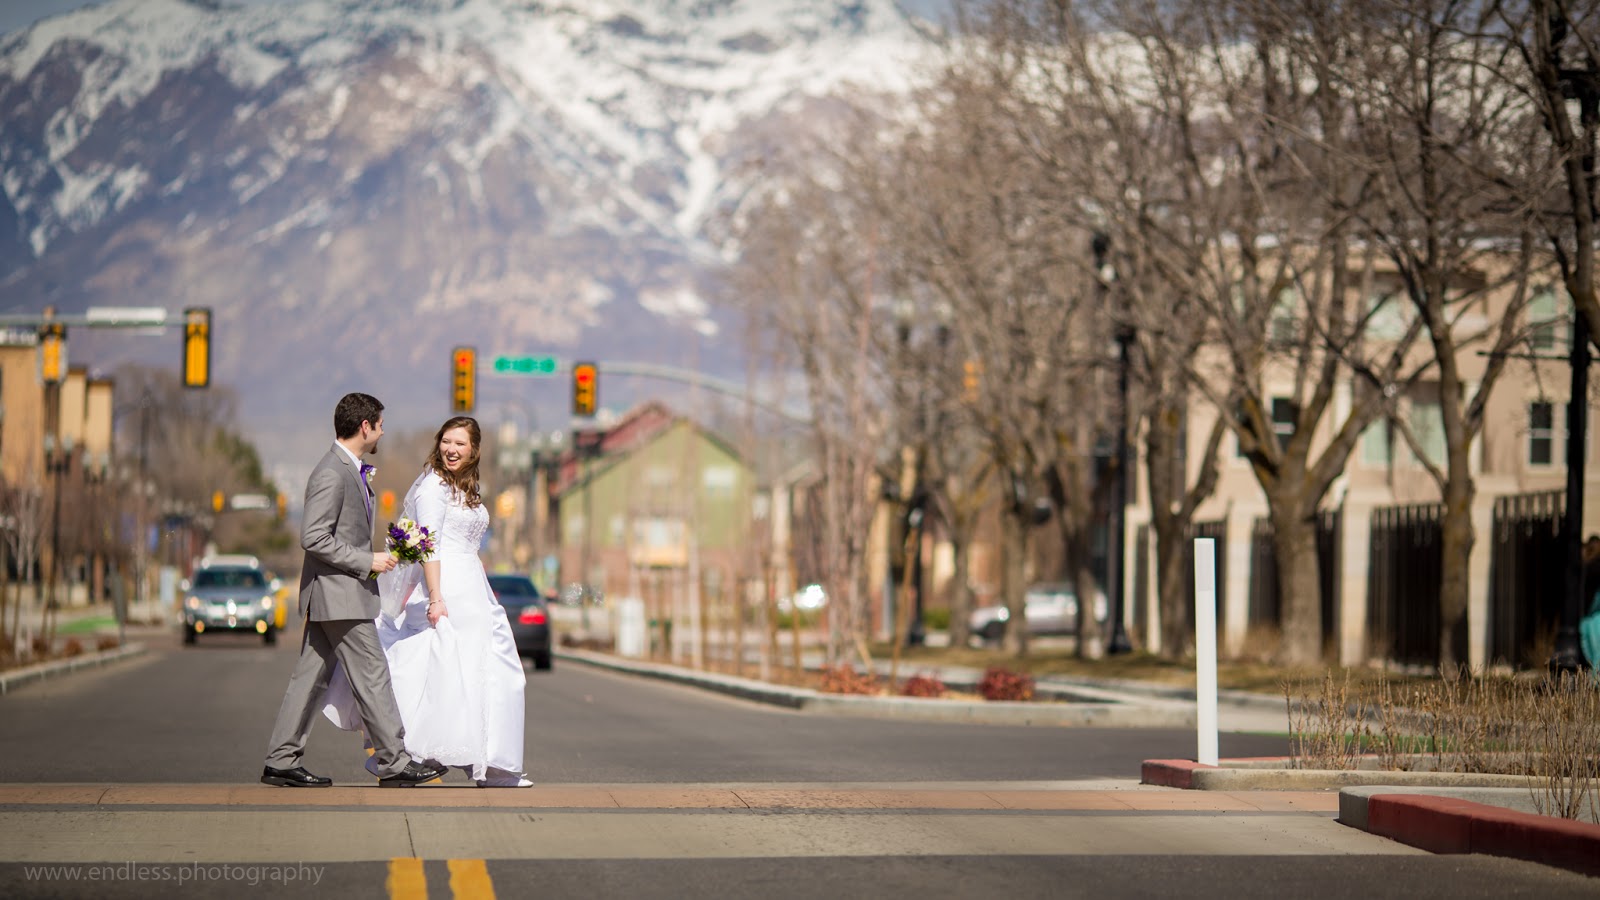 Logan Utah Wedding Photographer, Ogden LDS Temple, Spring, Wedding, Temple, Utah, Summer, Couple, Photographer, Photography, Endless Photography